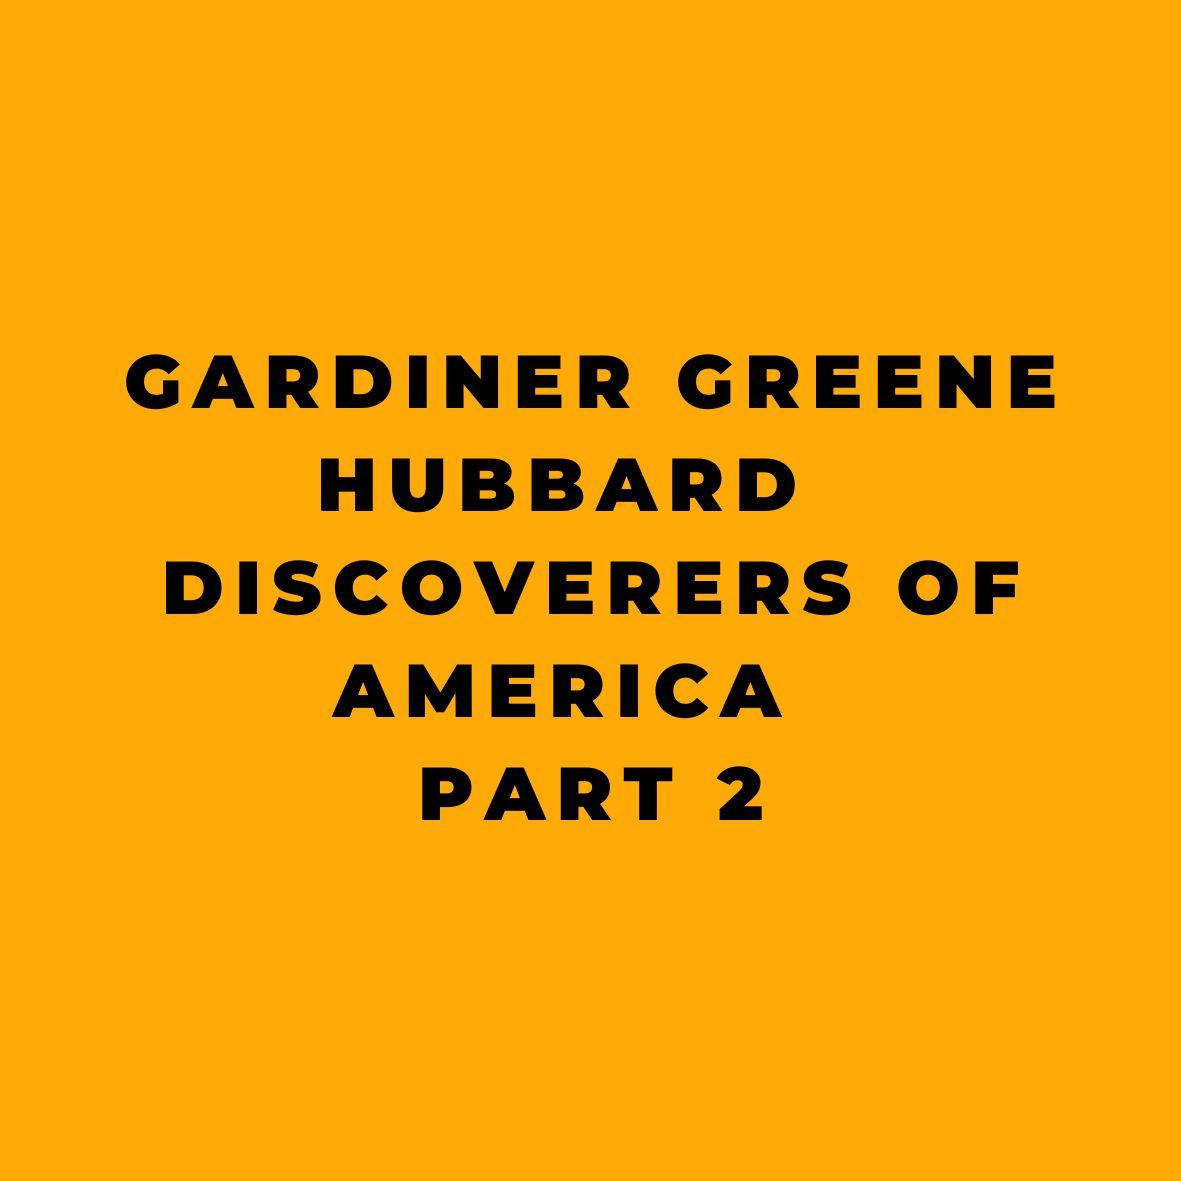 Gardiner Greene Hubbard Discoverers of America Part 2